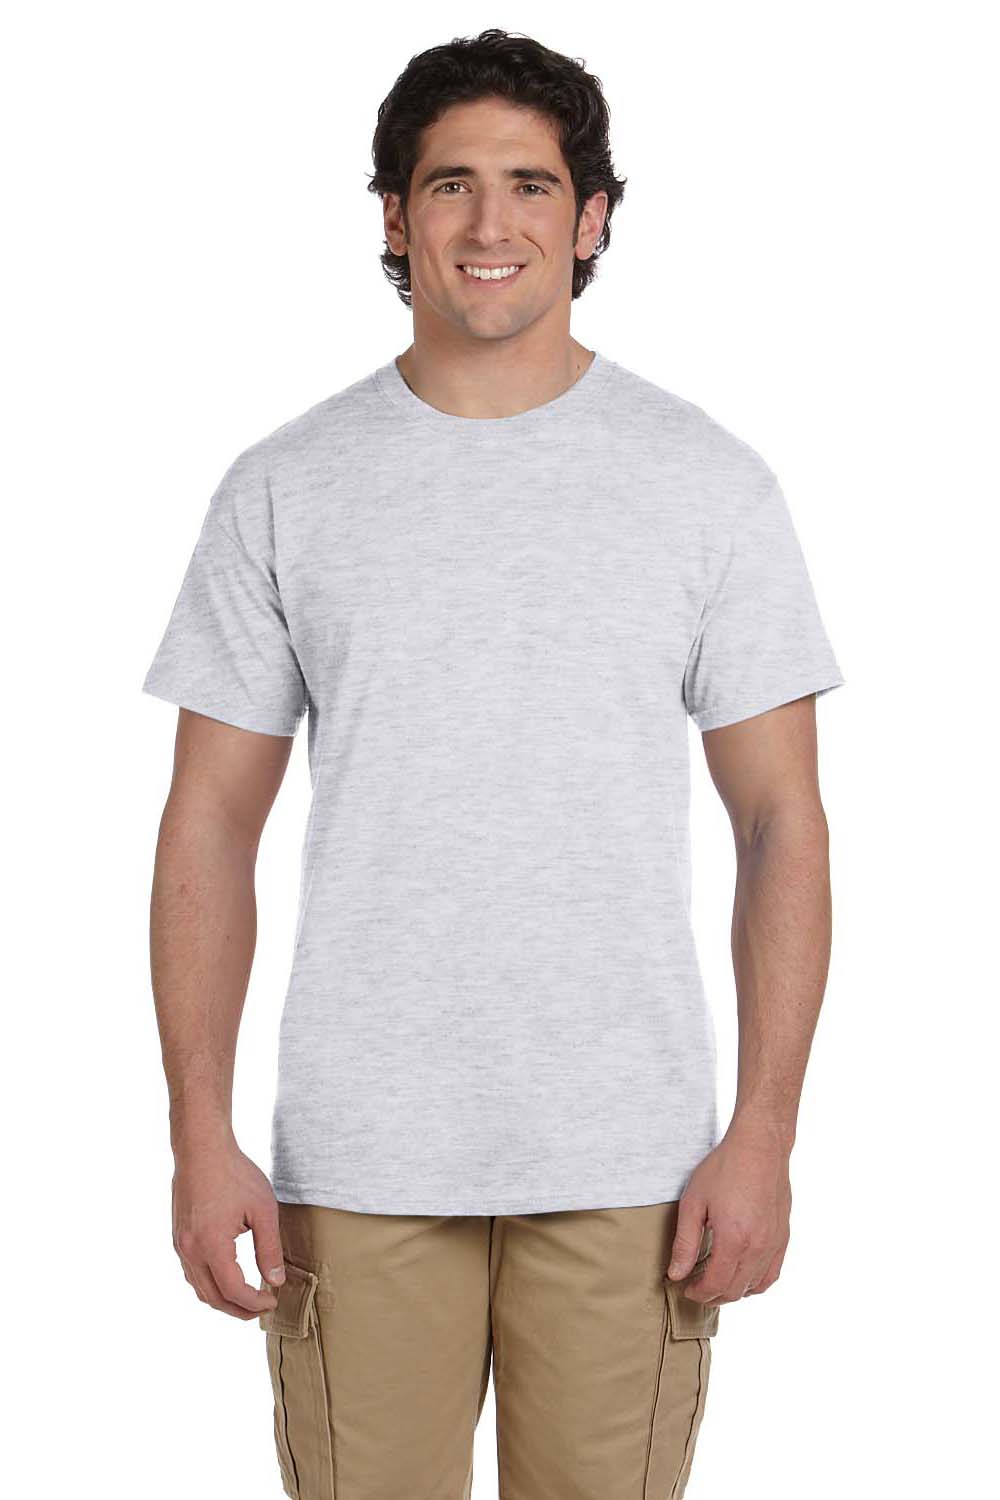 Hanes 5170 Mens EcoSmart Short Sleeve Crewneck T-Shirt Ash Grey Front